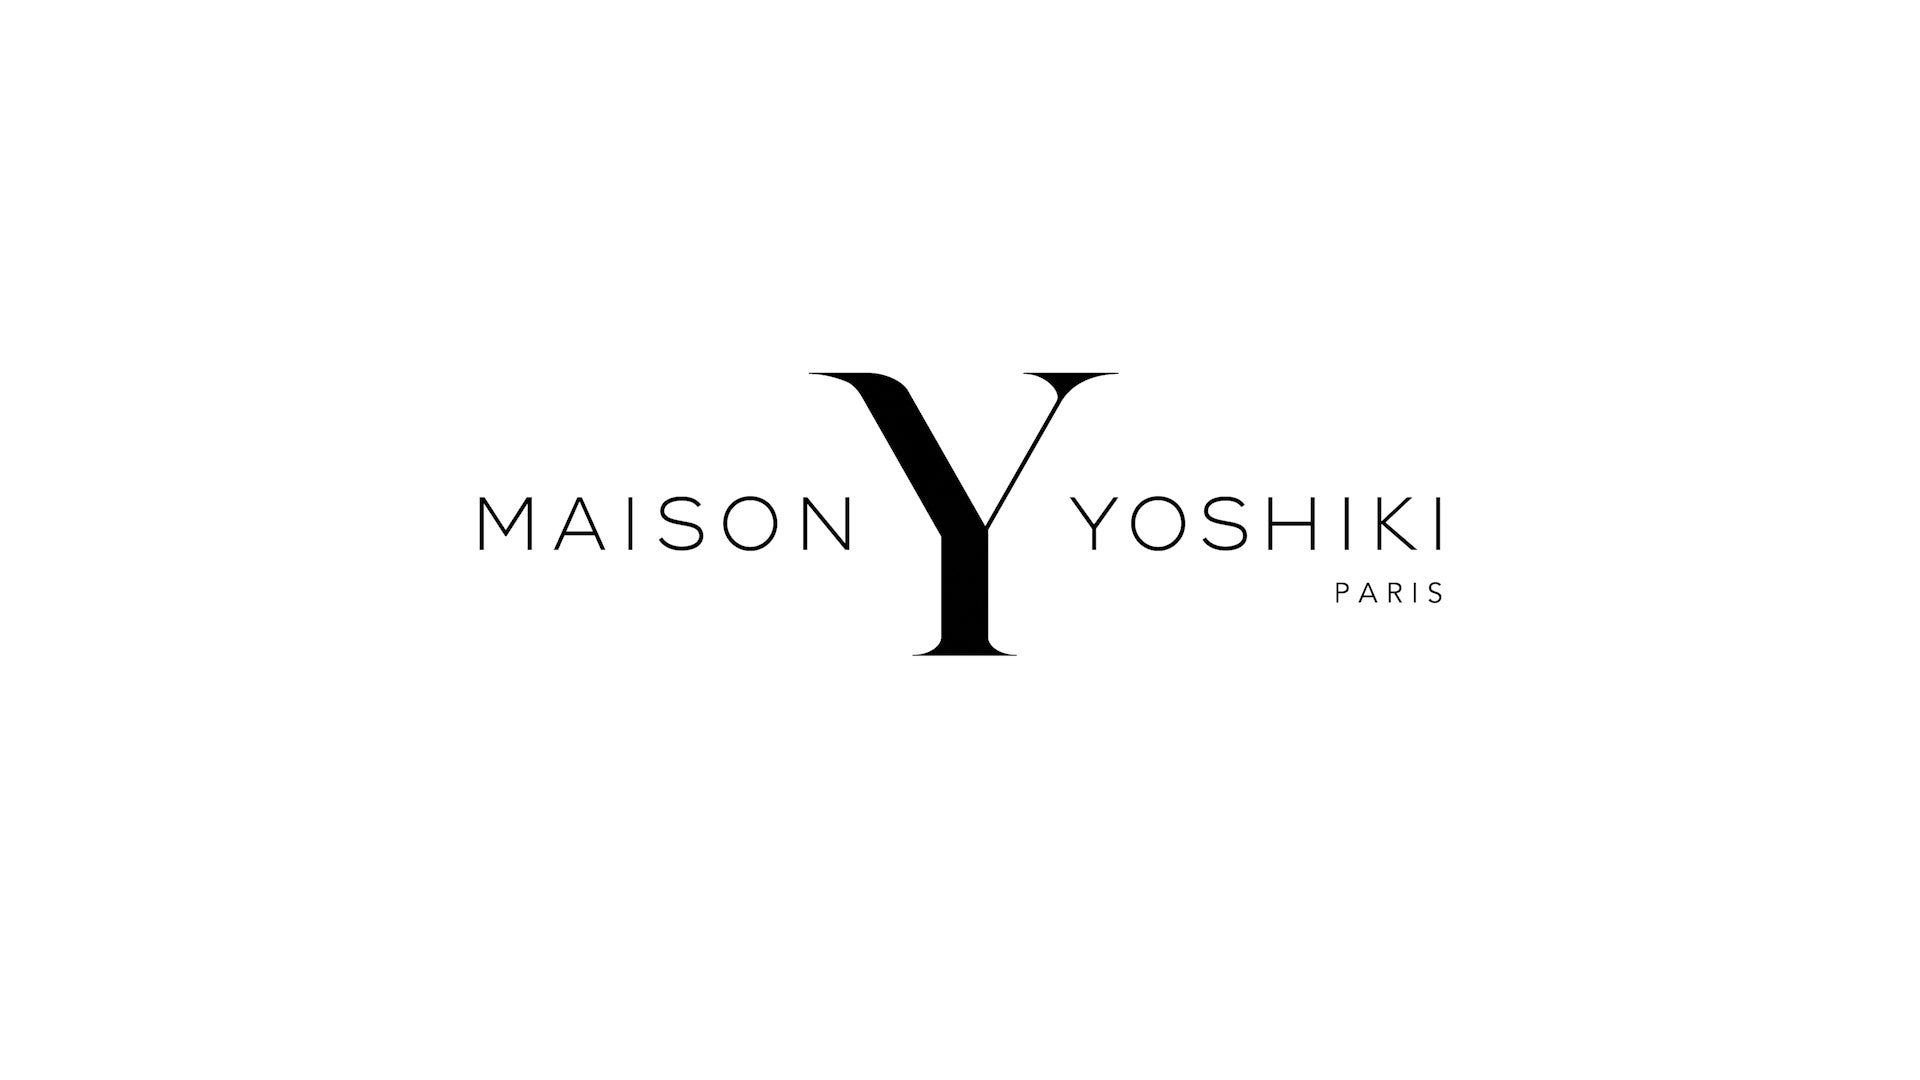 YOSHIKI パリで記者会見　新ファッションブランド「MAISON YOSHIKI PARIS」をフランスに設立のサブ画像1